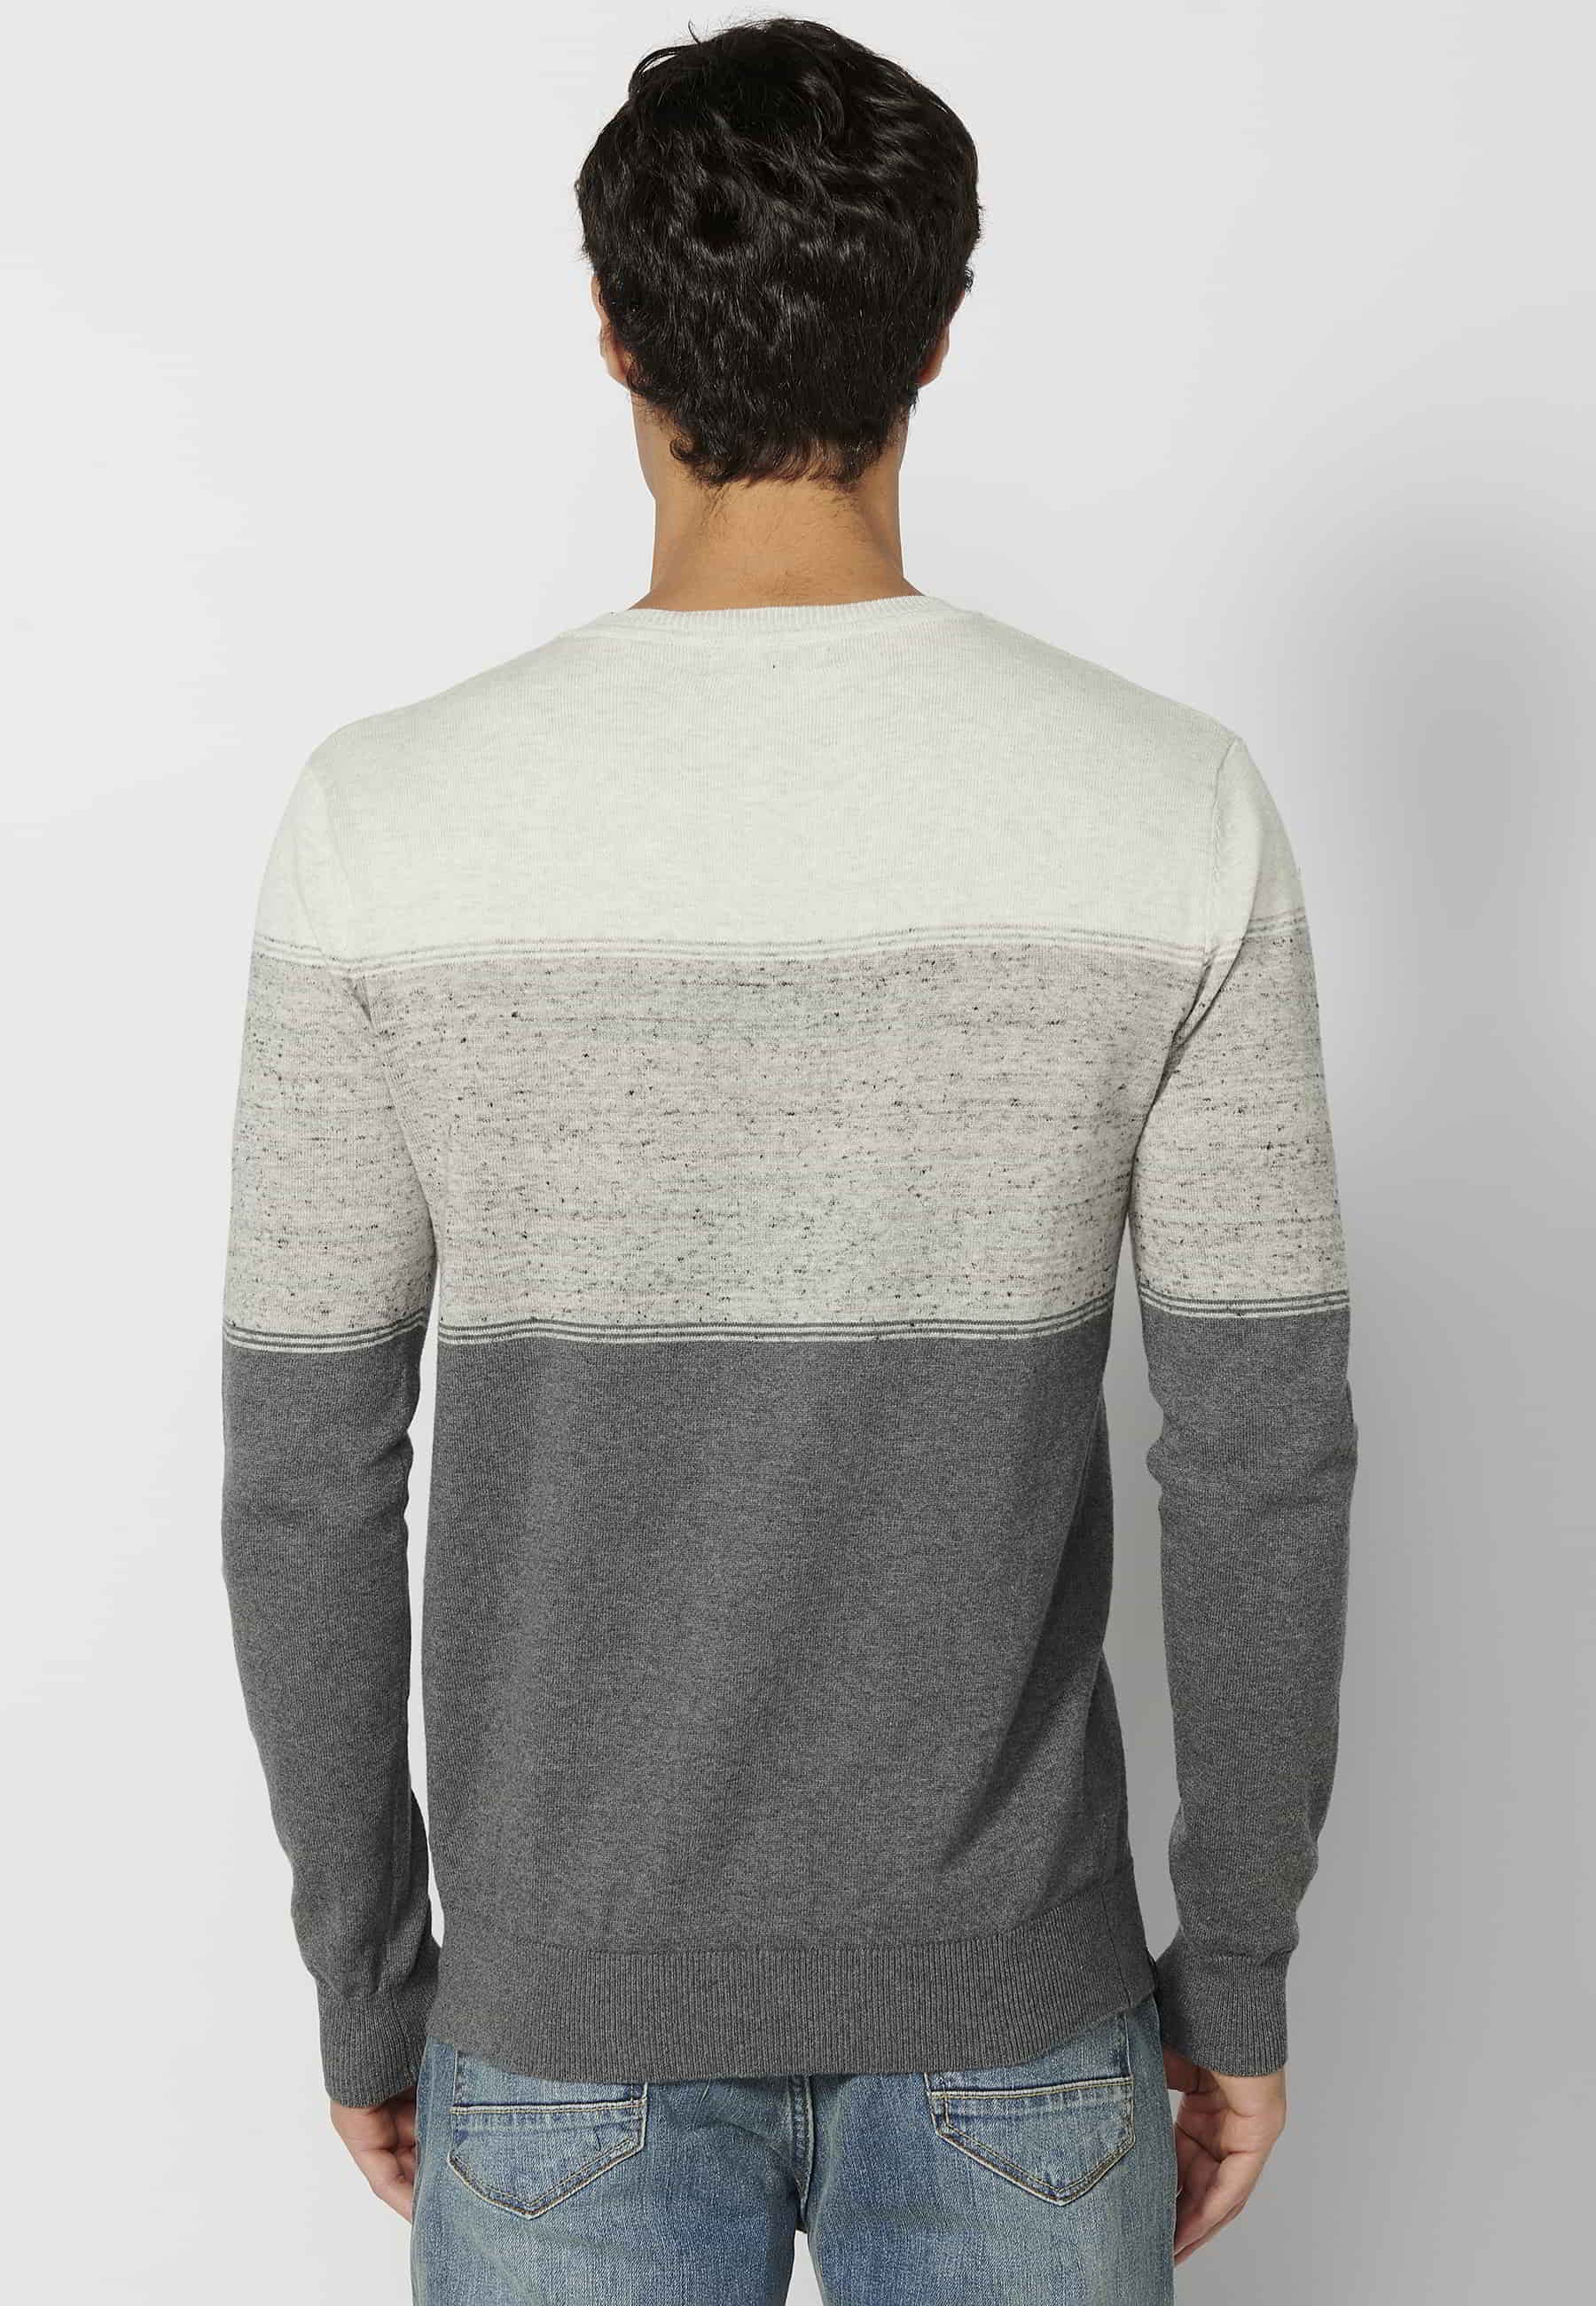 Jersey de punto de algodón manga larga cuello redondo color gris para hombre 6